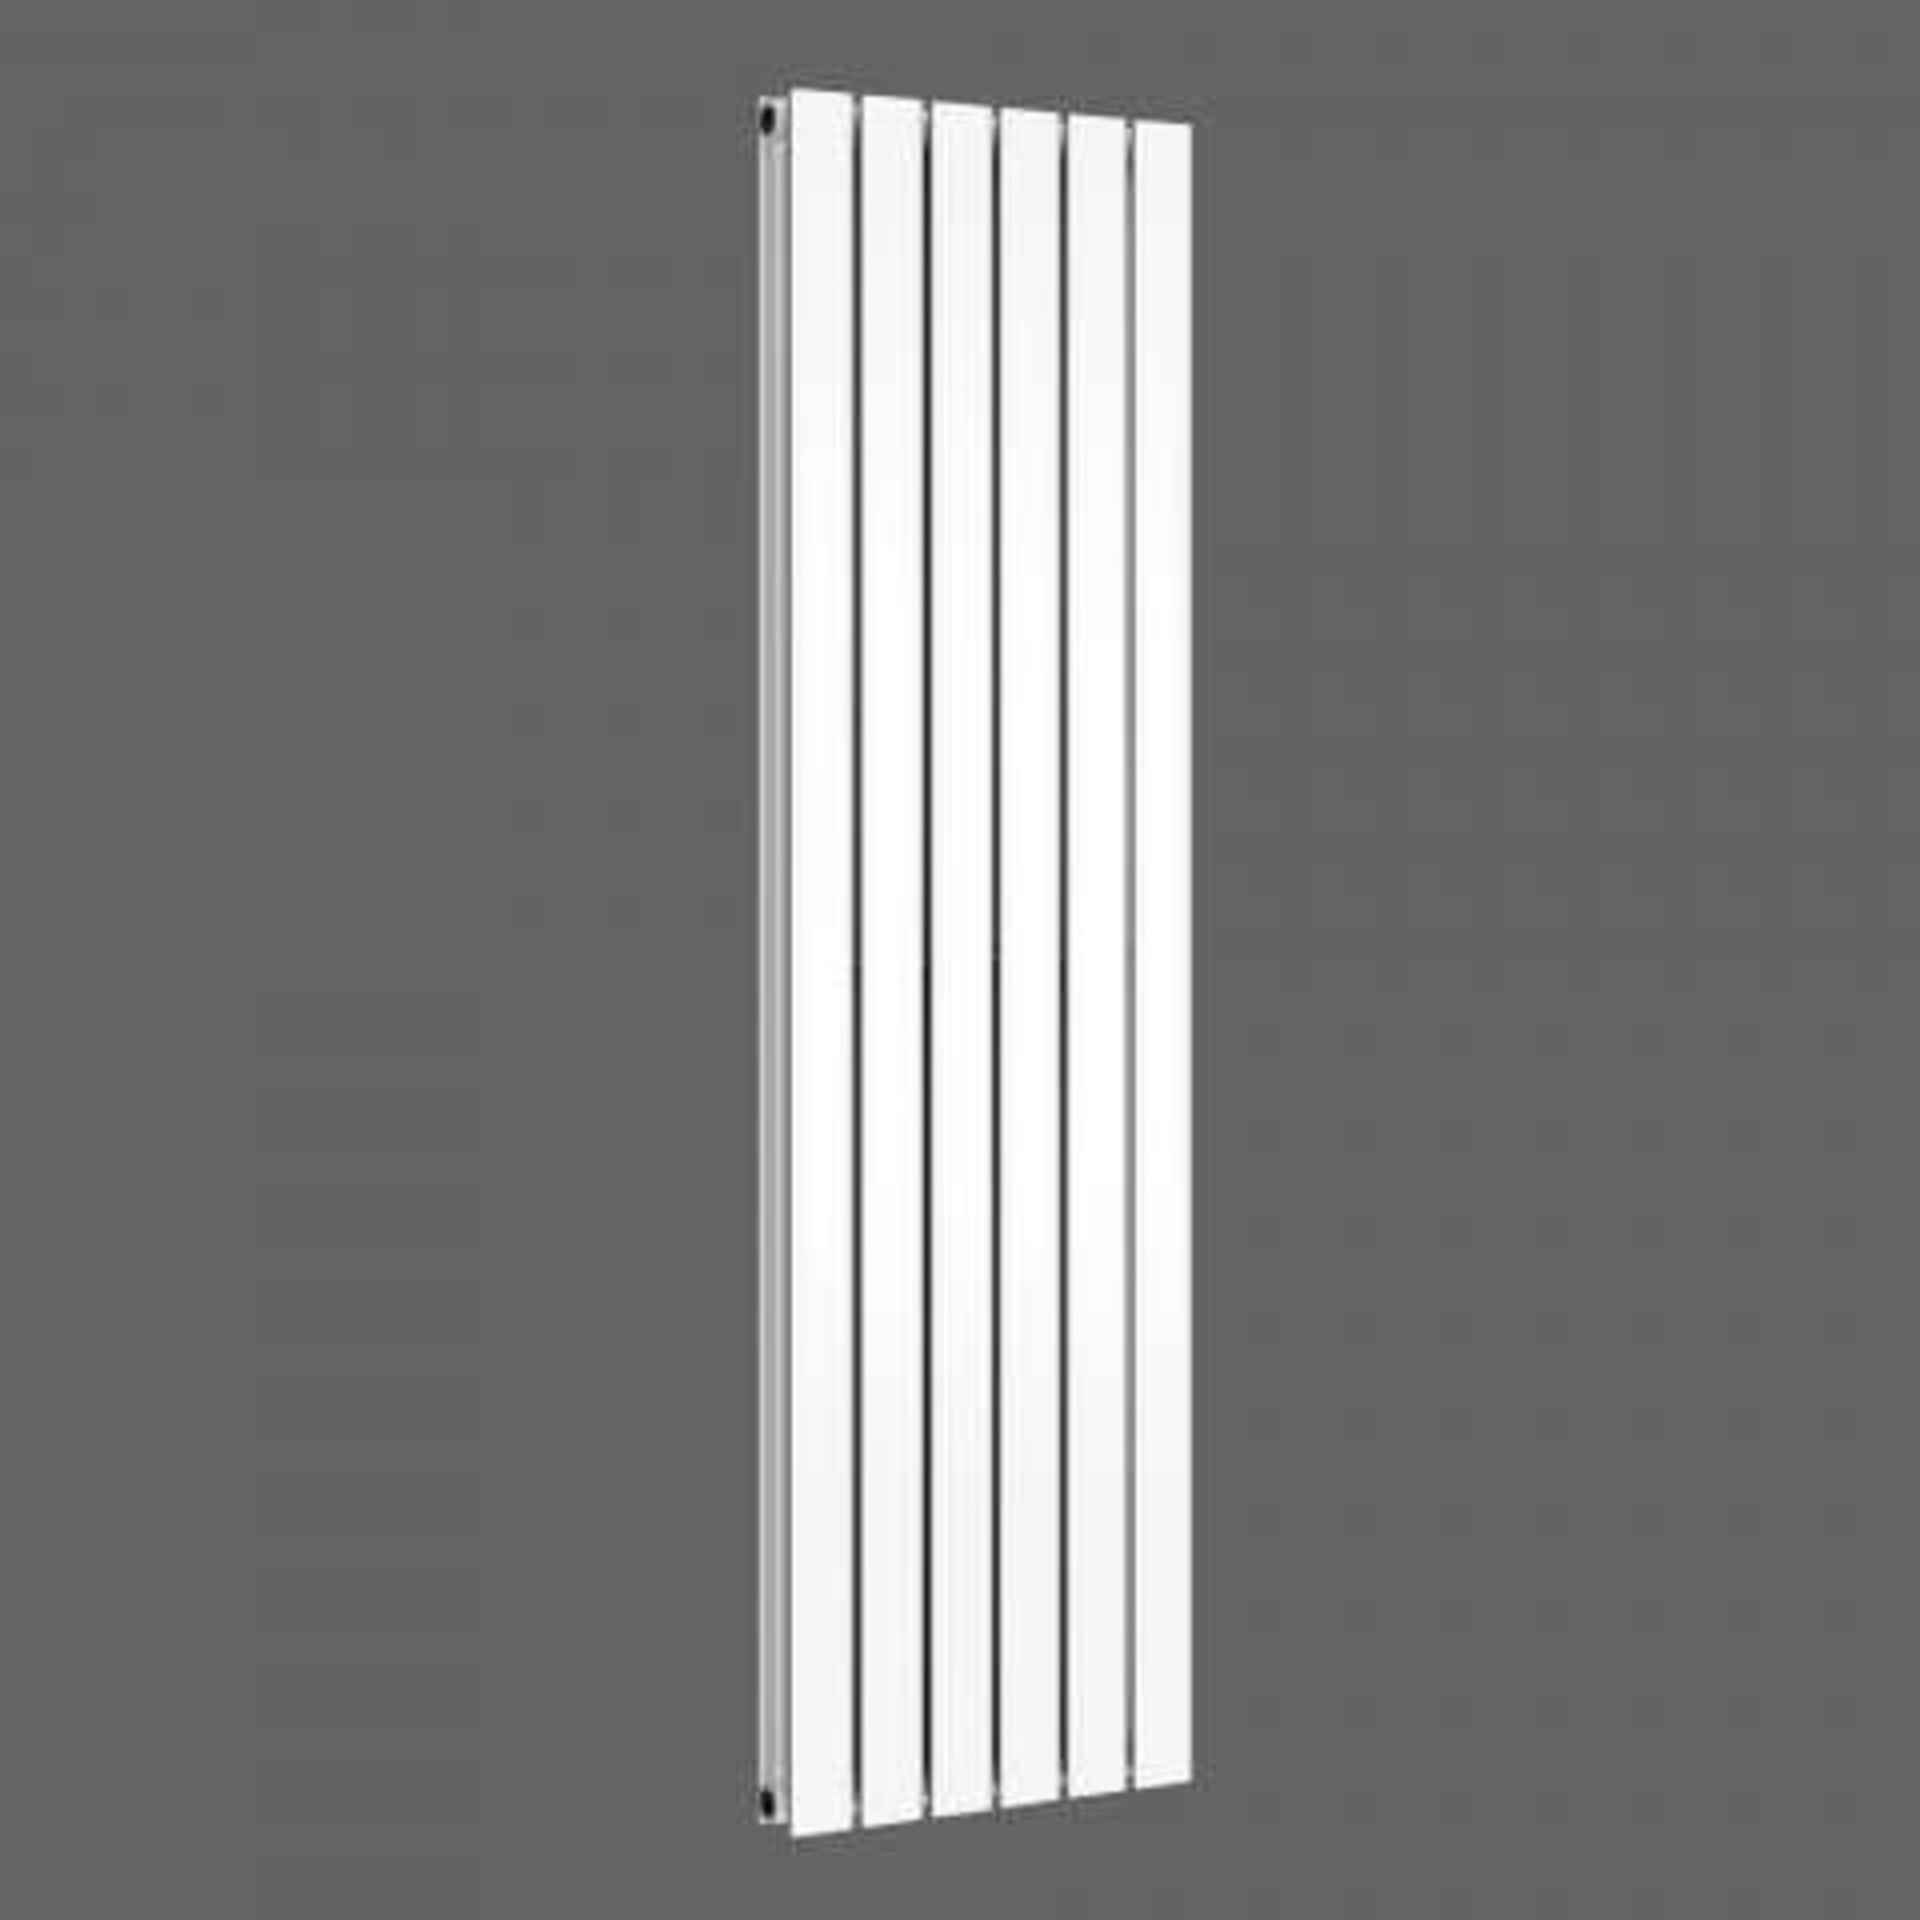 (O44) 1600x452mm Gloss White Double Flat Panel Vertical Radiator - Thera Range. RRP £474.99. - Image 3 of 3